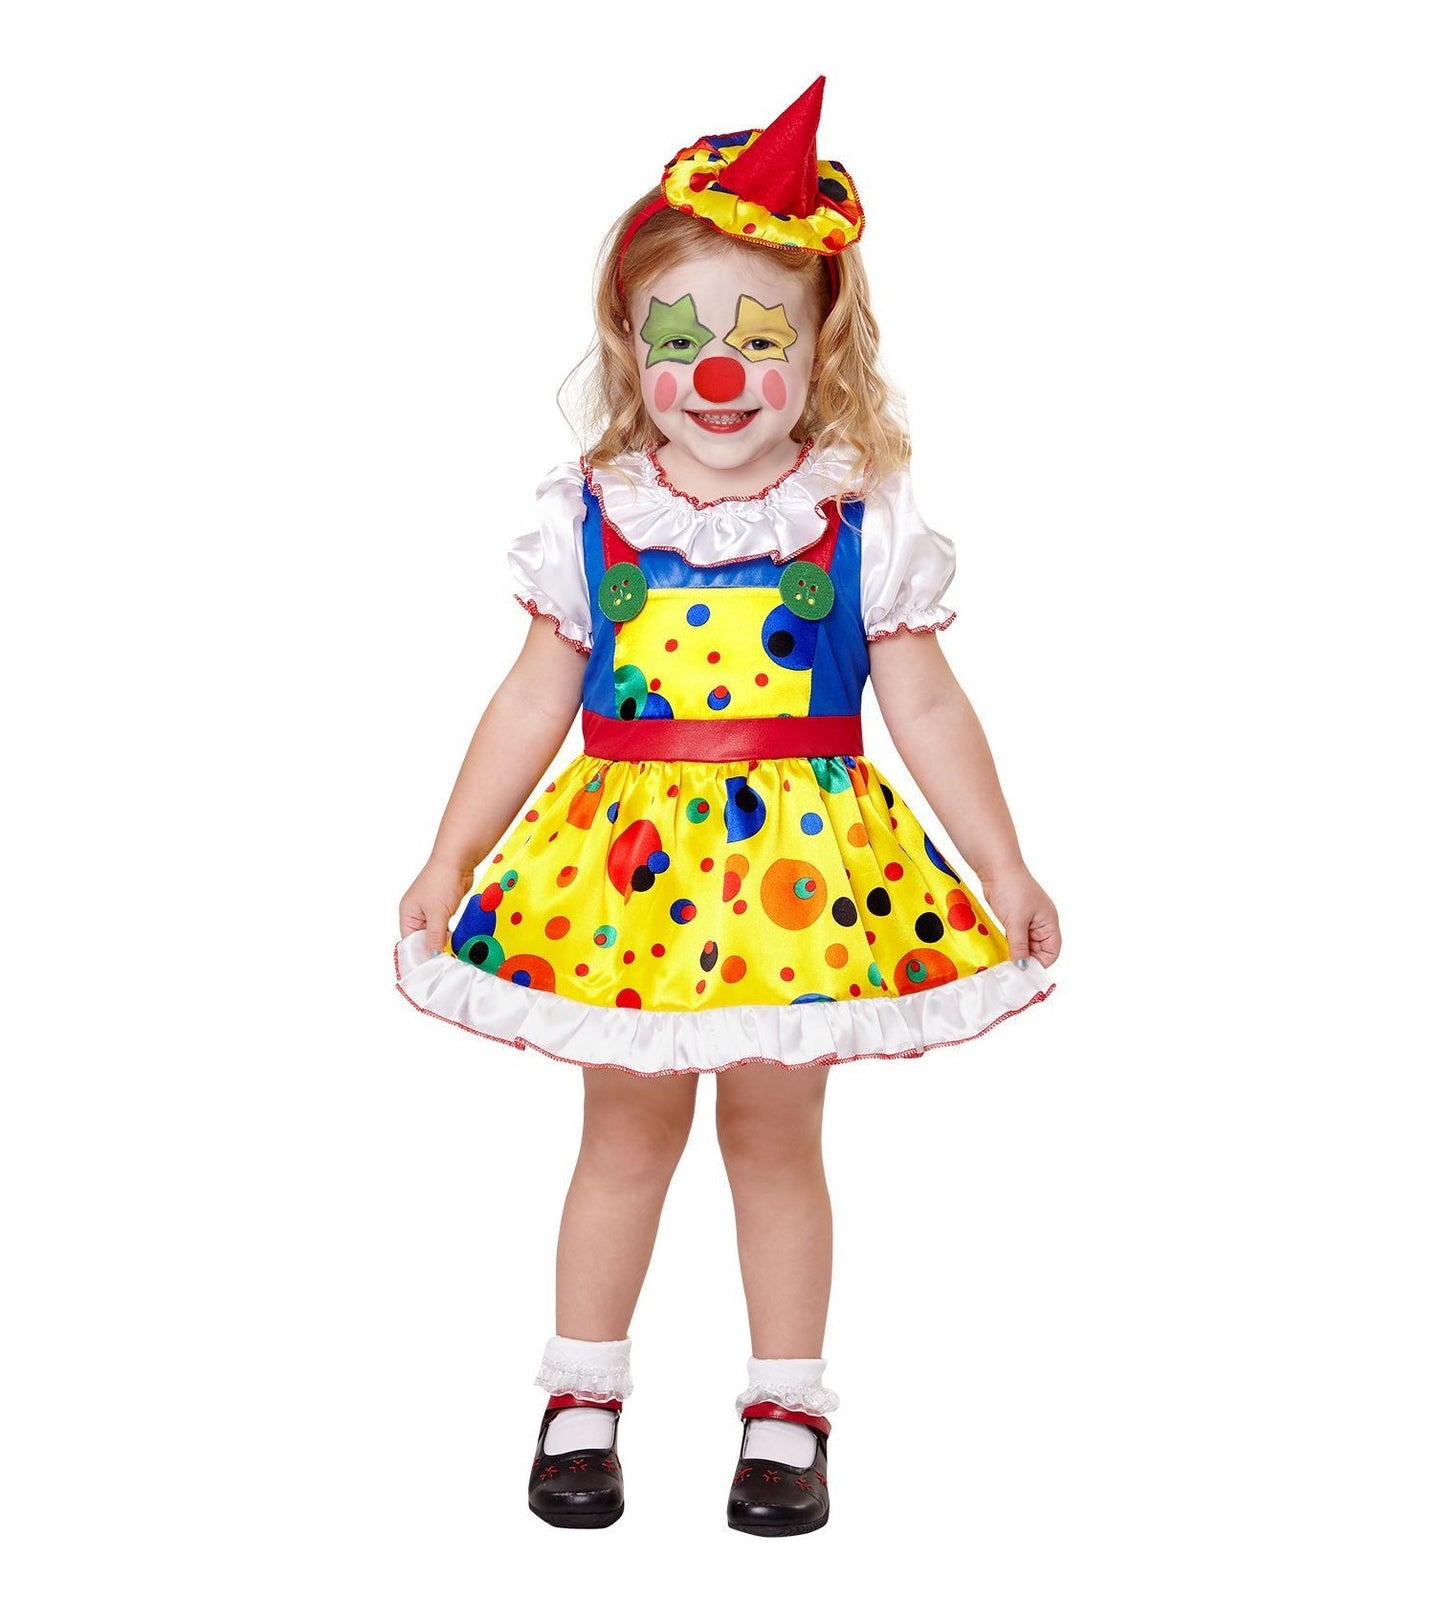 Cute Clown dress with headpiece costume